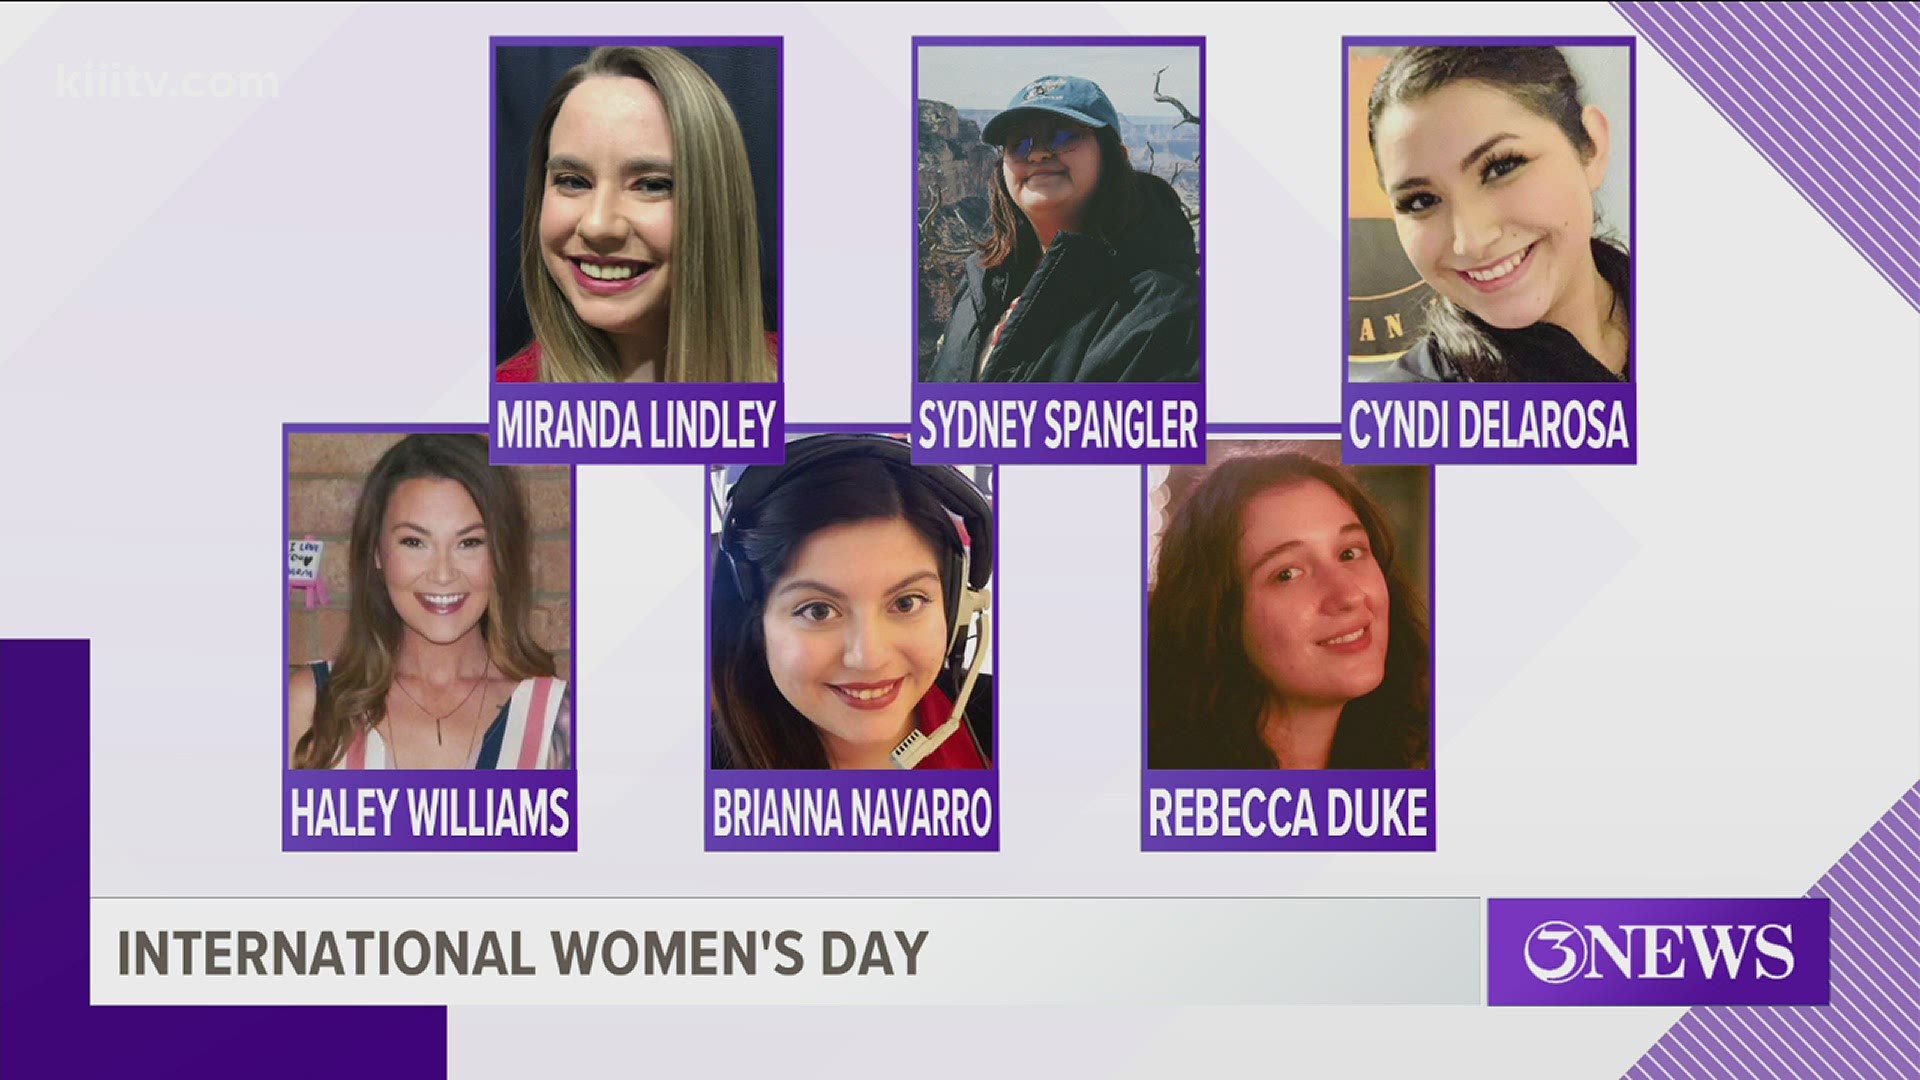 3News celebrates International Women's Day